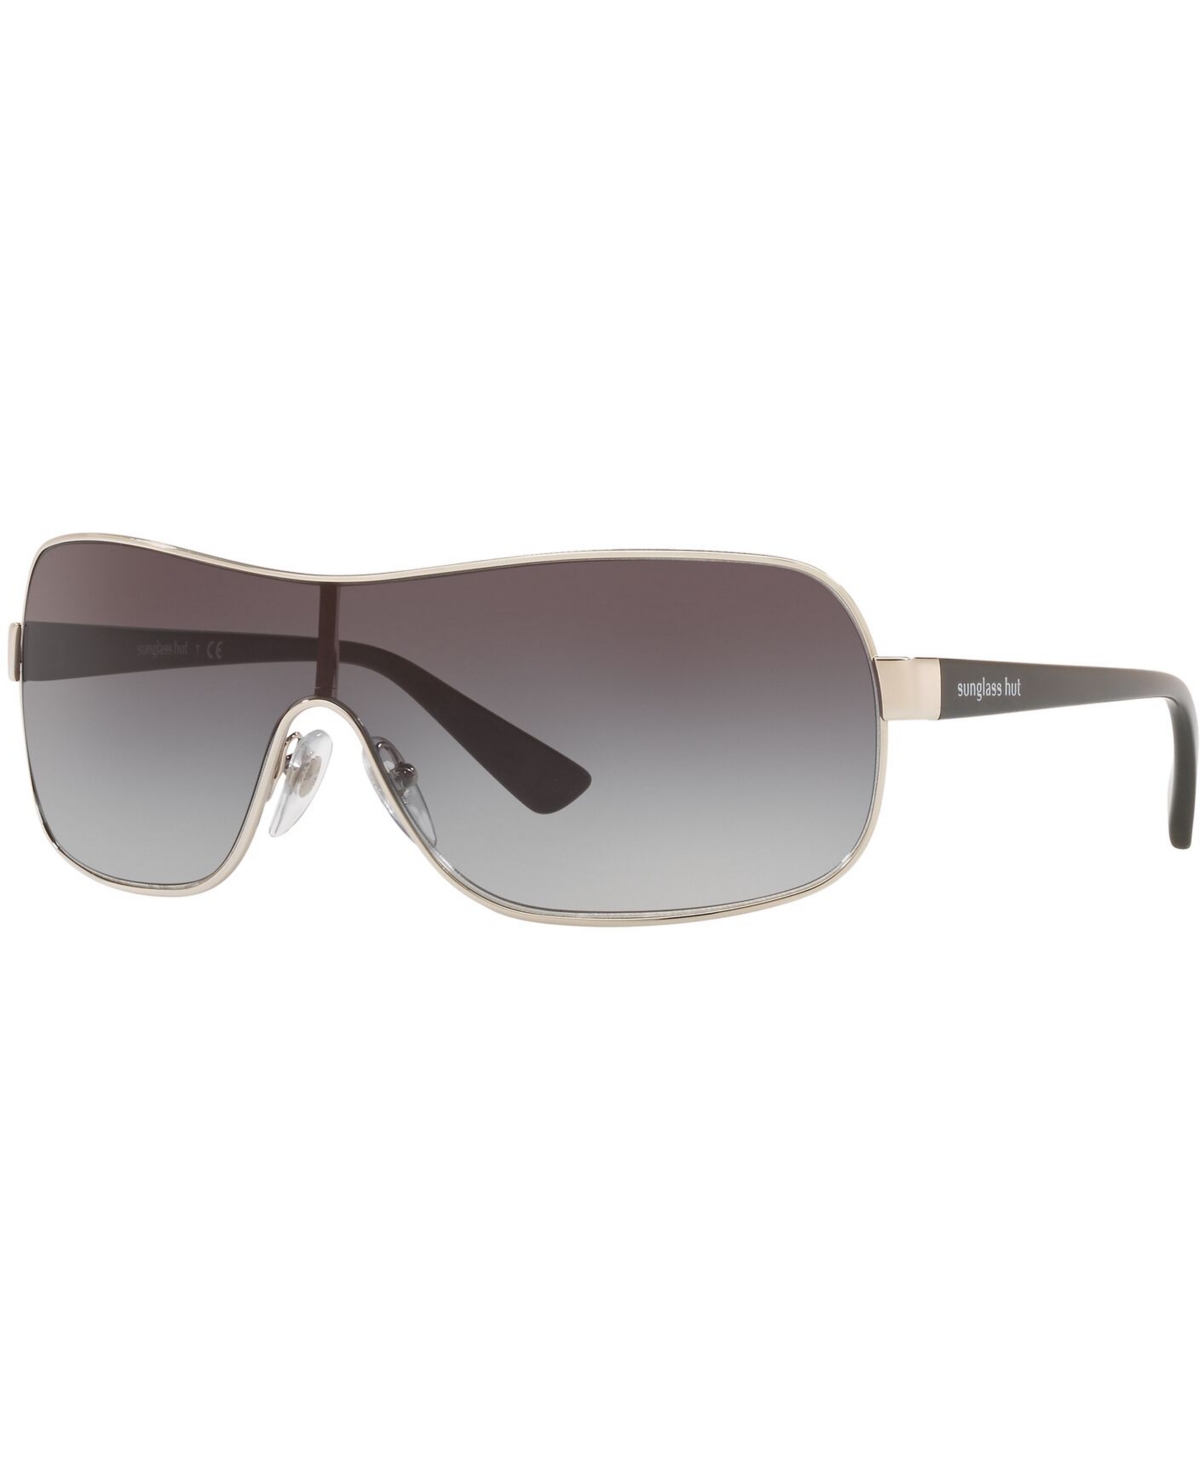 Sunglass Hut Collection Sunglasses, 0hu1008 In Shiny Silver,grey Gradient